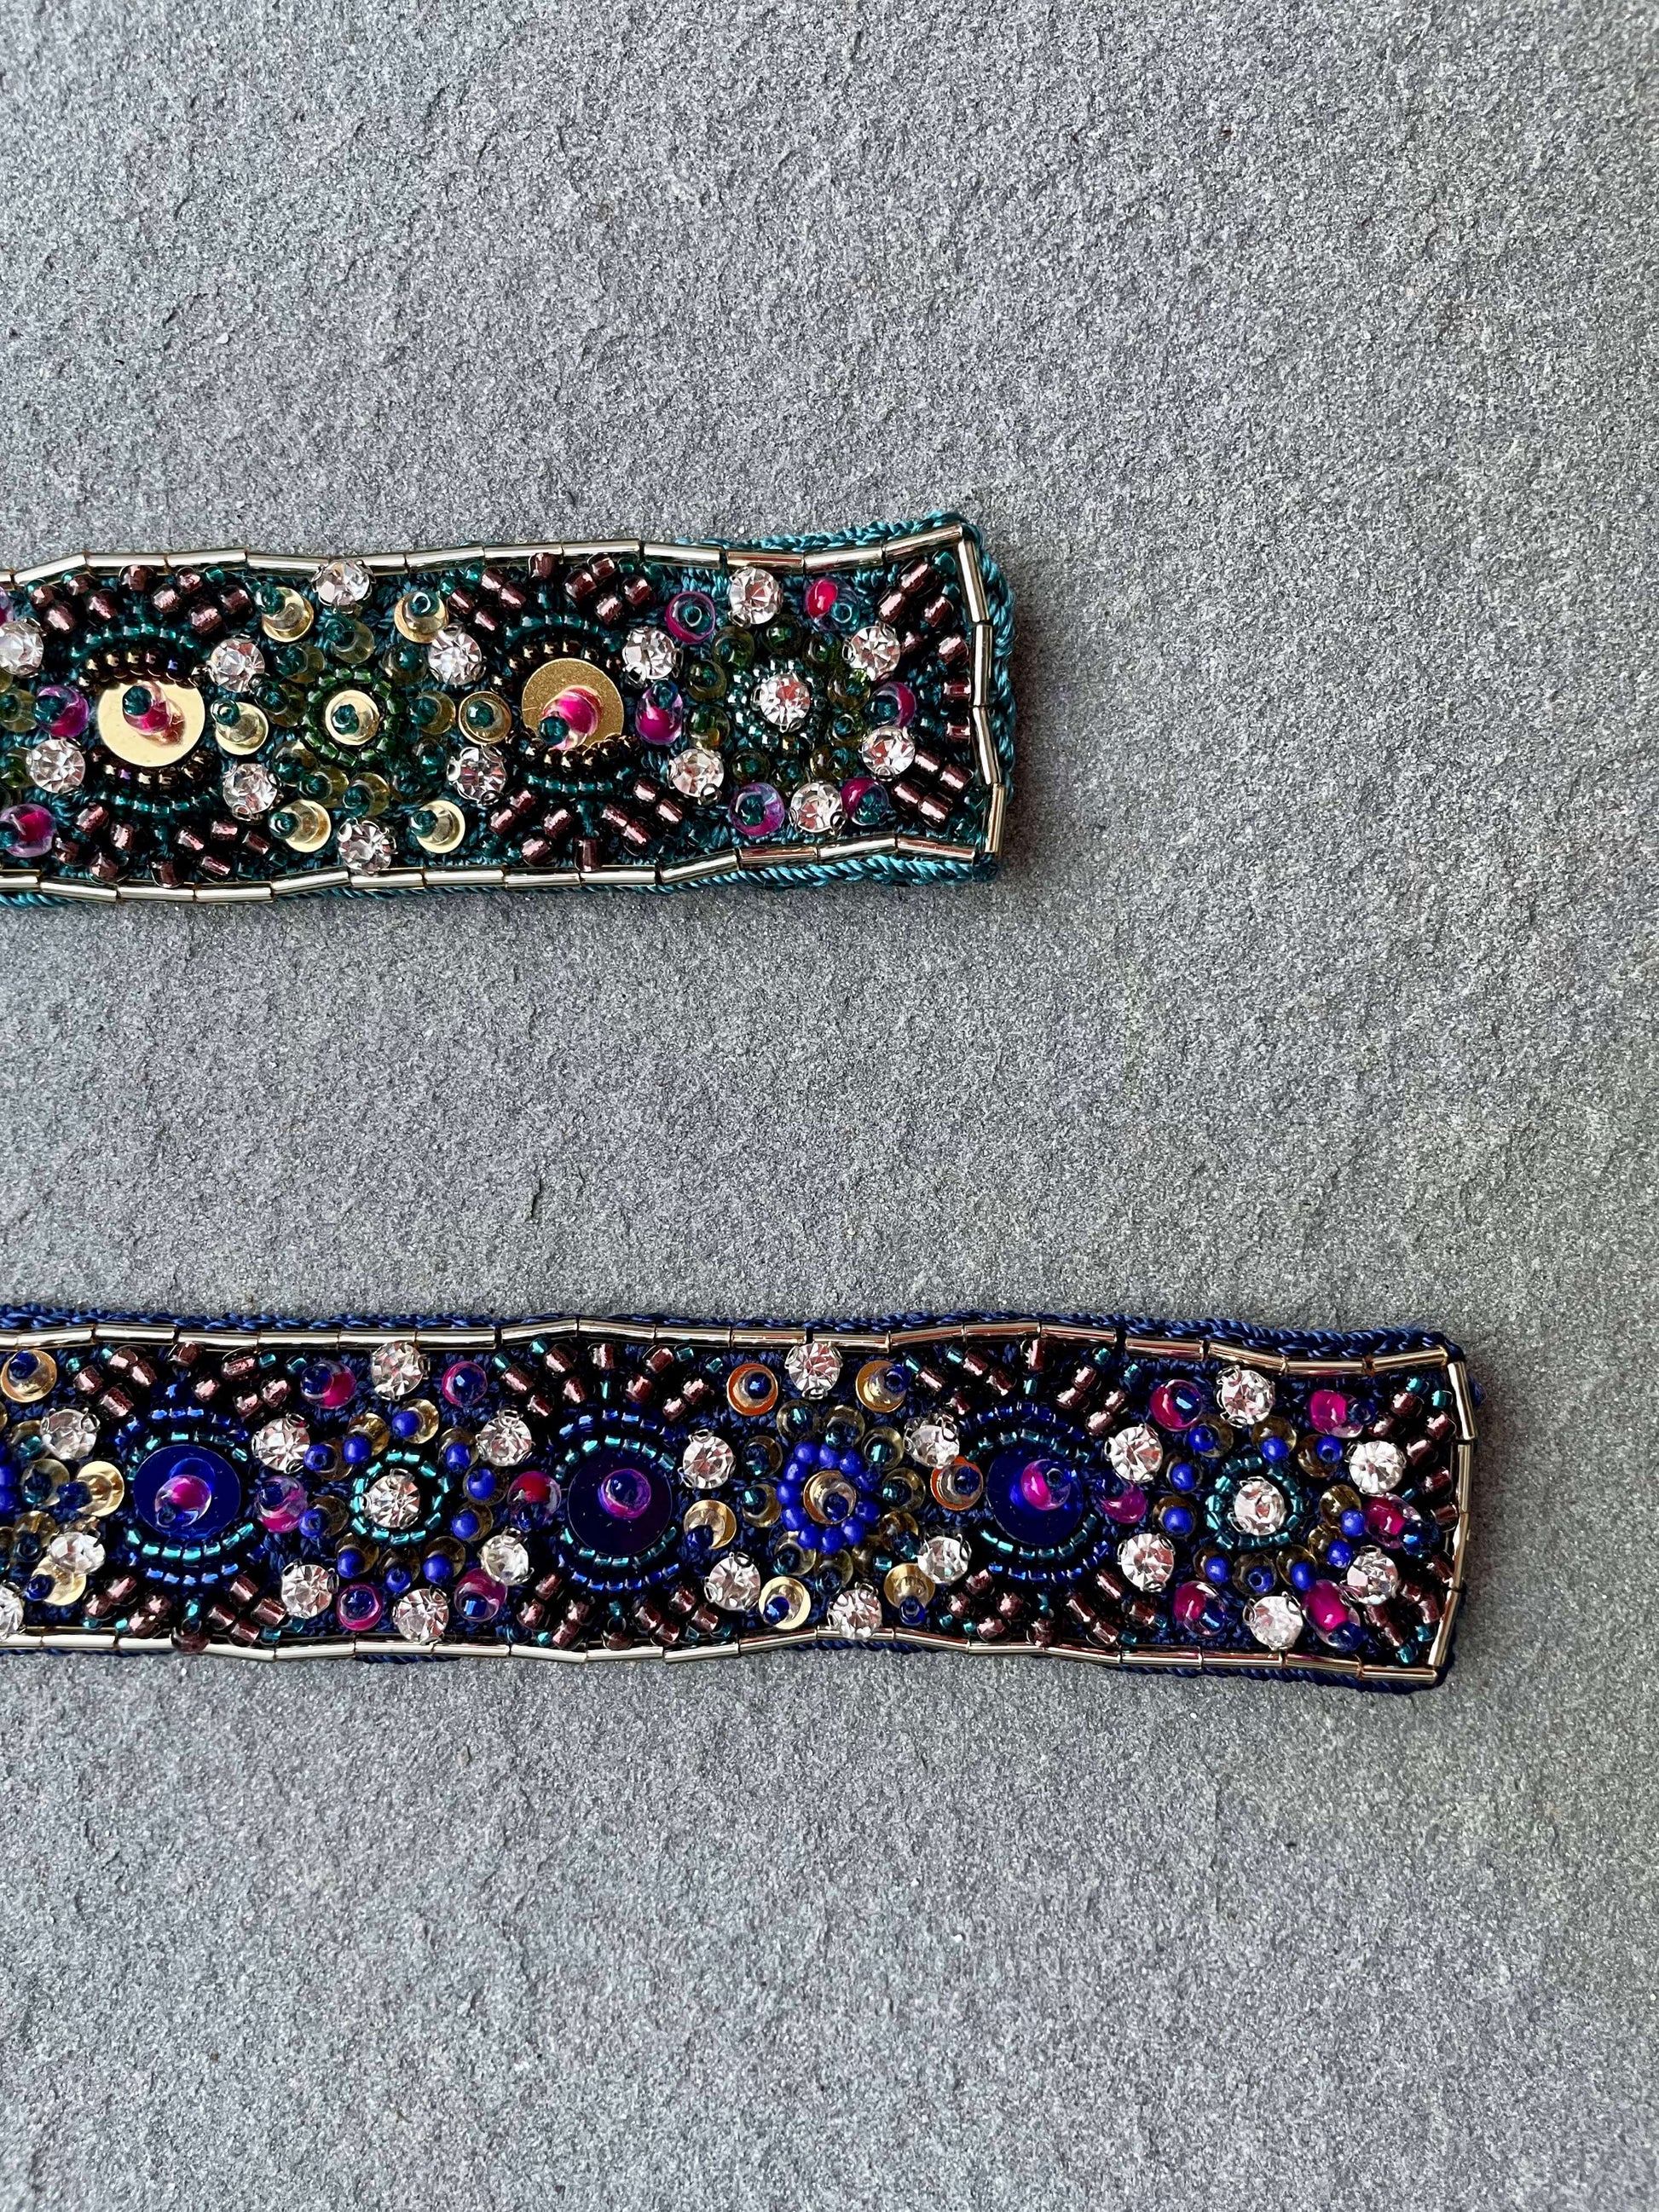 Pirilti Bead Embroidery Handmade Bracelet in Forest Green